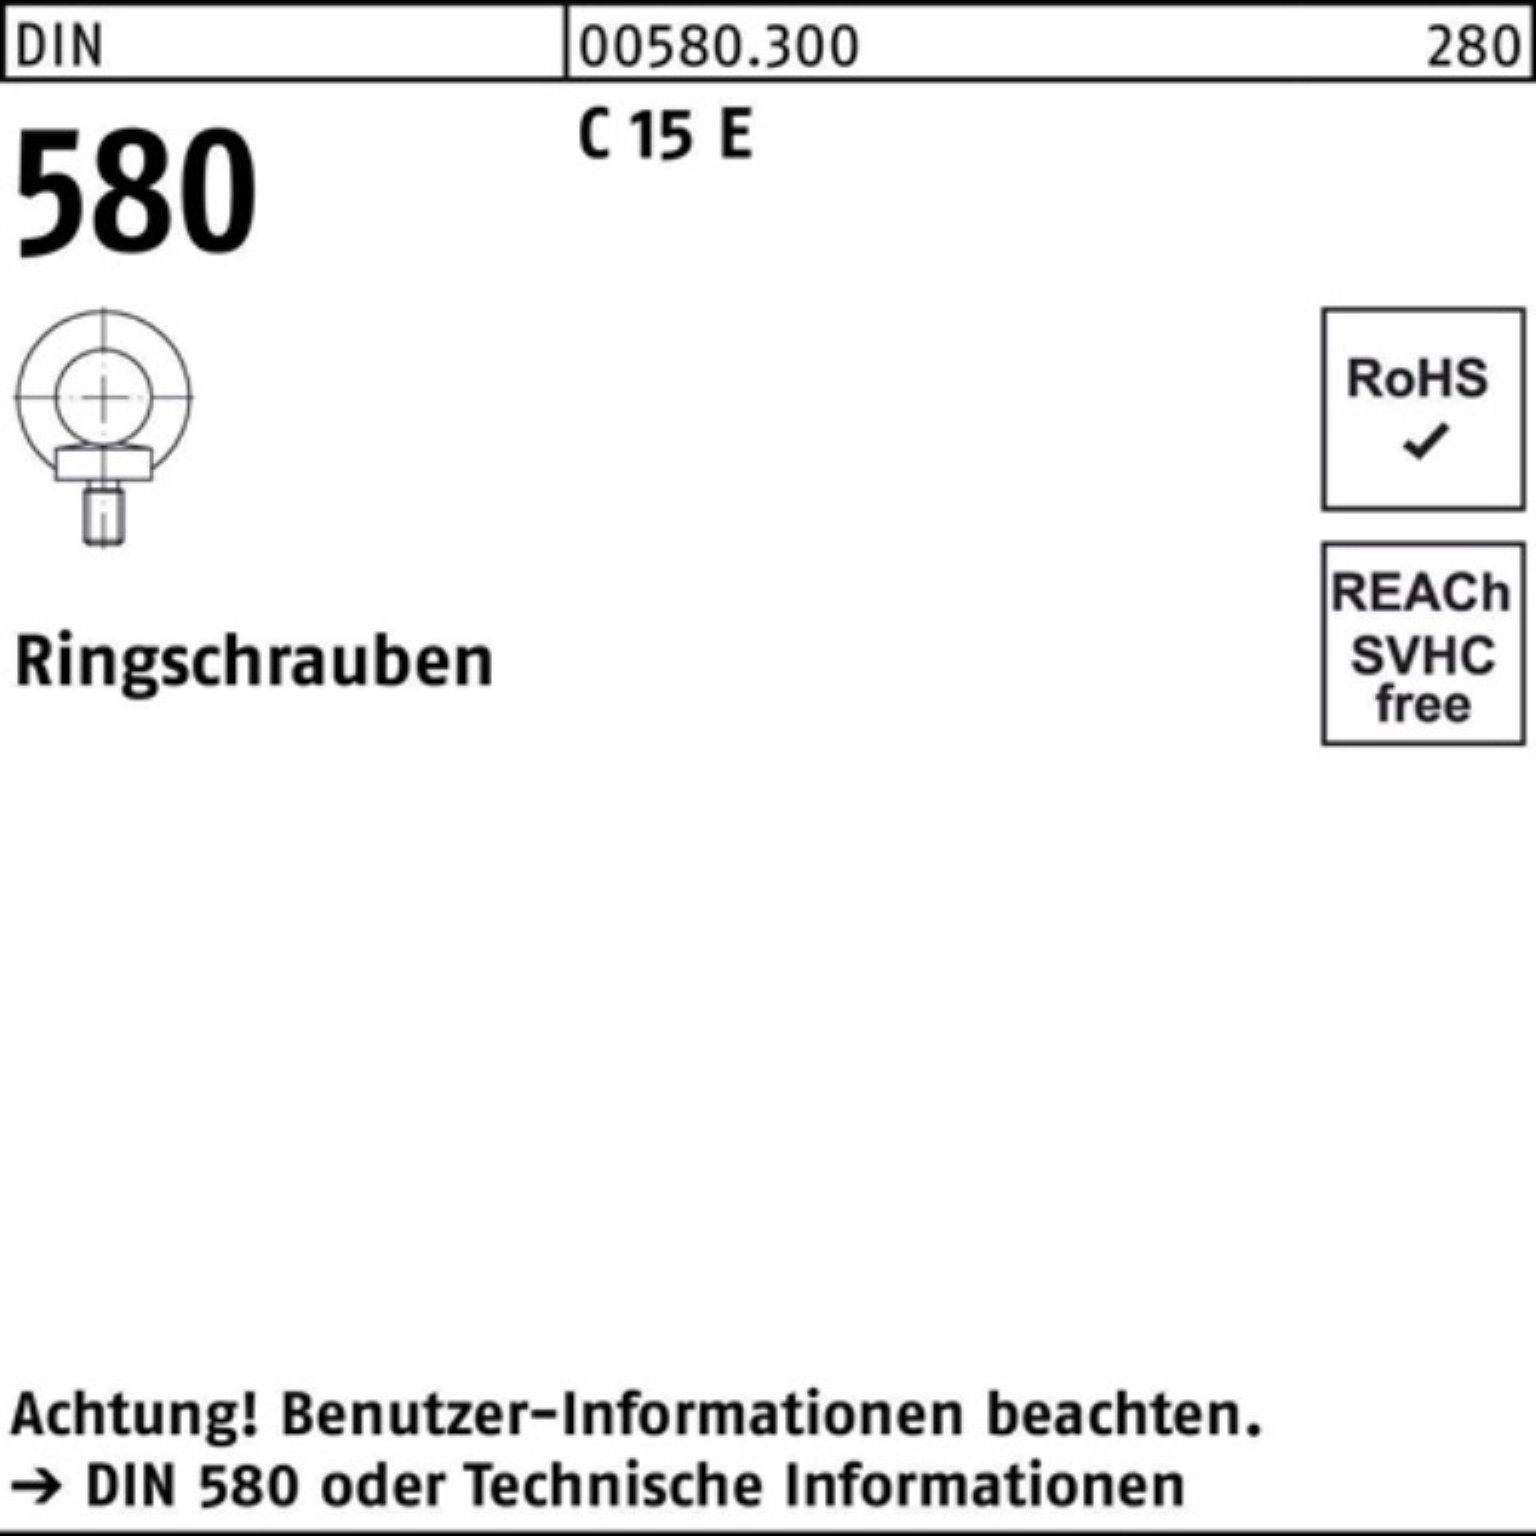 Reyher Schraube 100er Pack Ringschraube DIN 580 M12 C 15 E 10 Stück DIN 580 C 15 E Ri